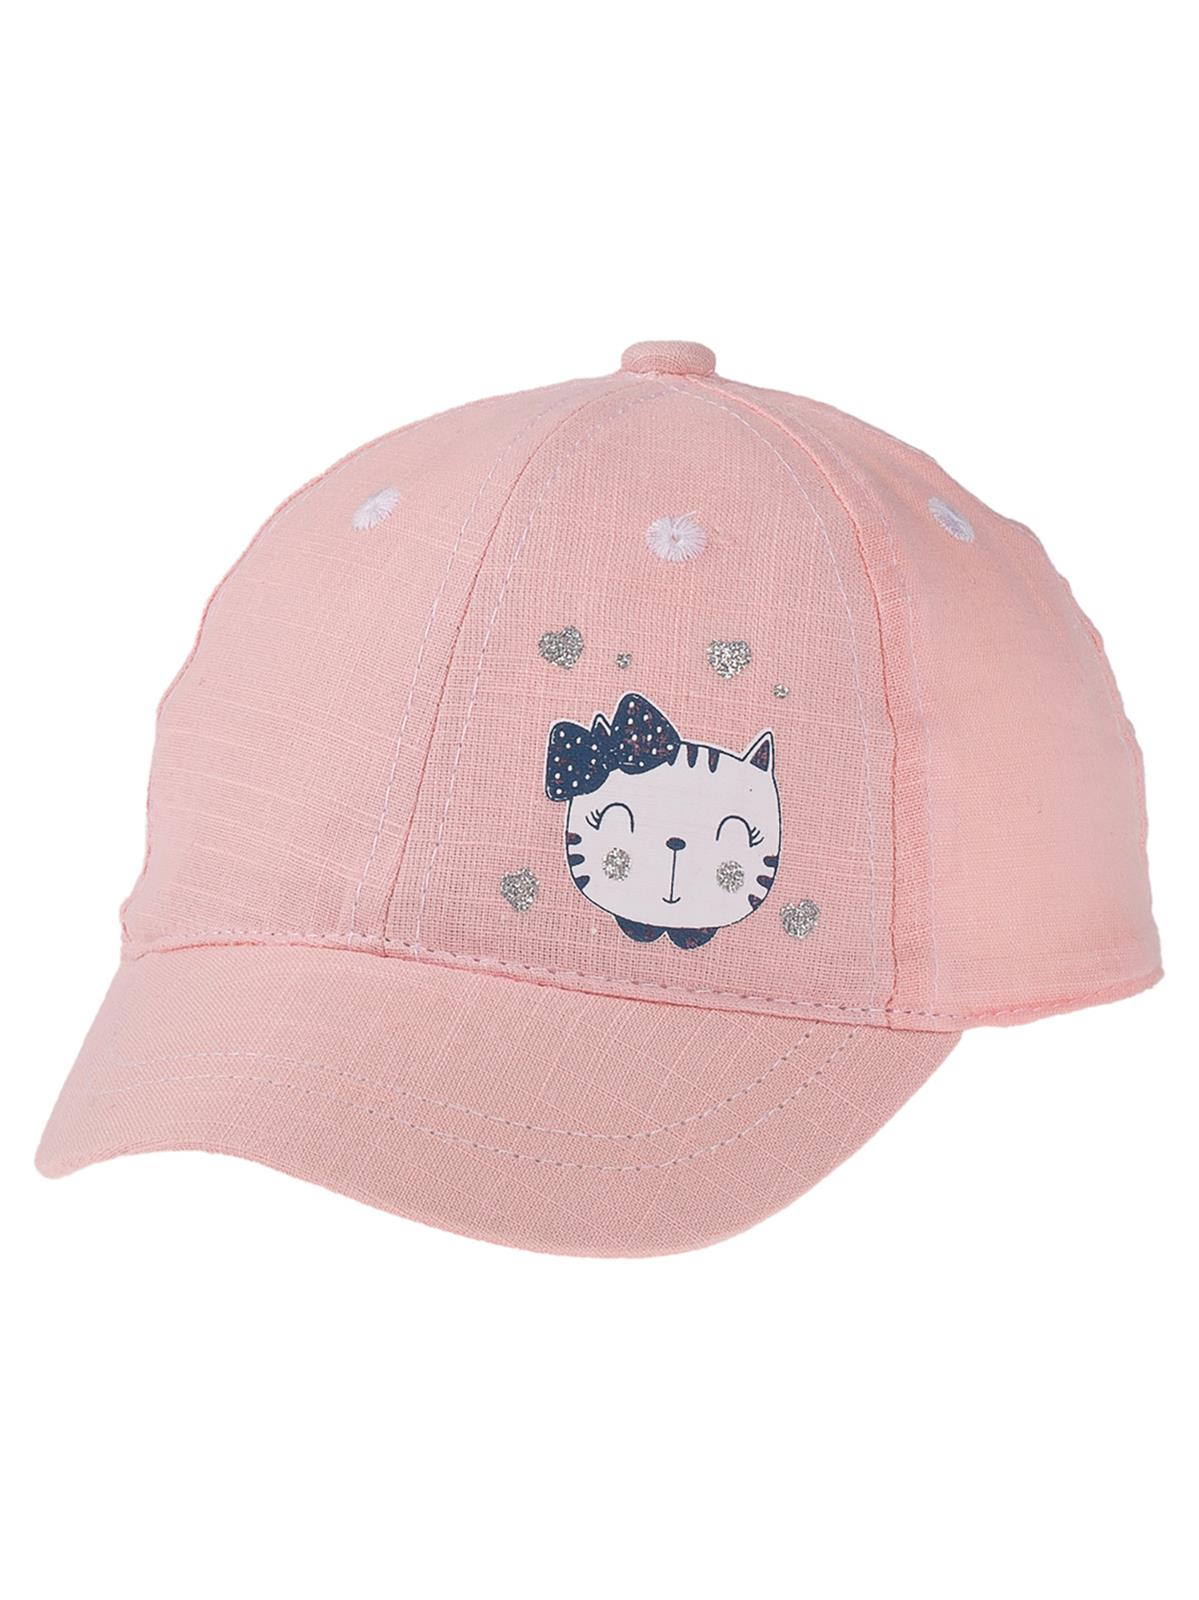 Kitti Kız Bebek Kep Şapka 0-18 Ay Pudra Pembe